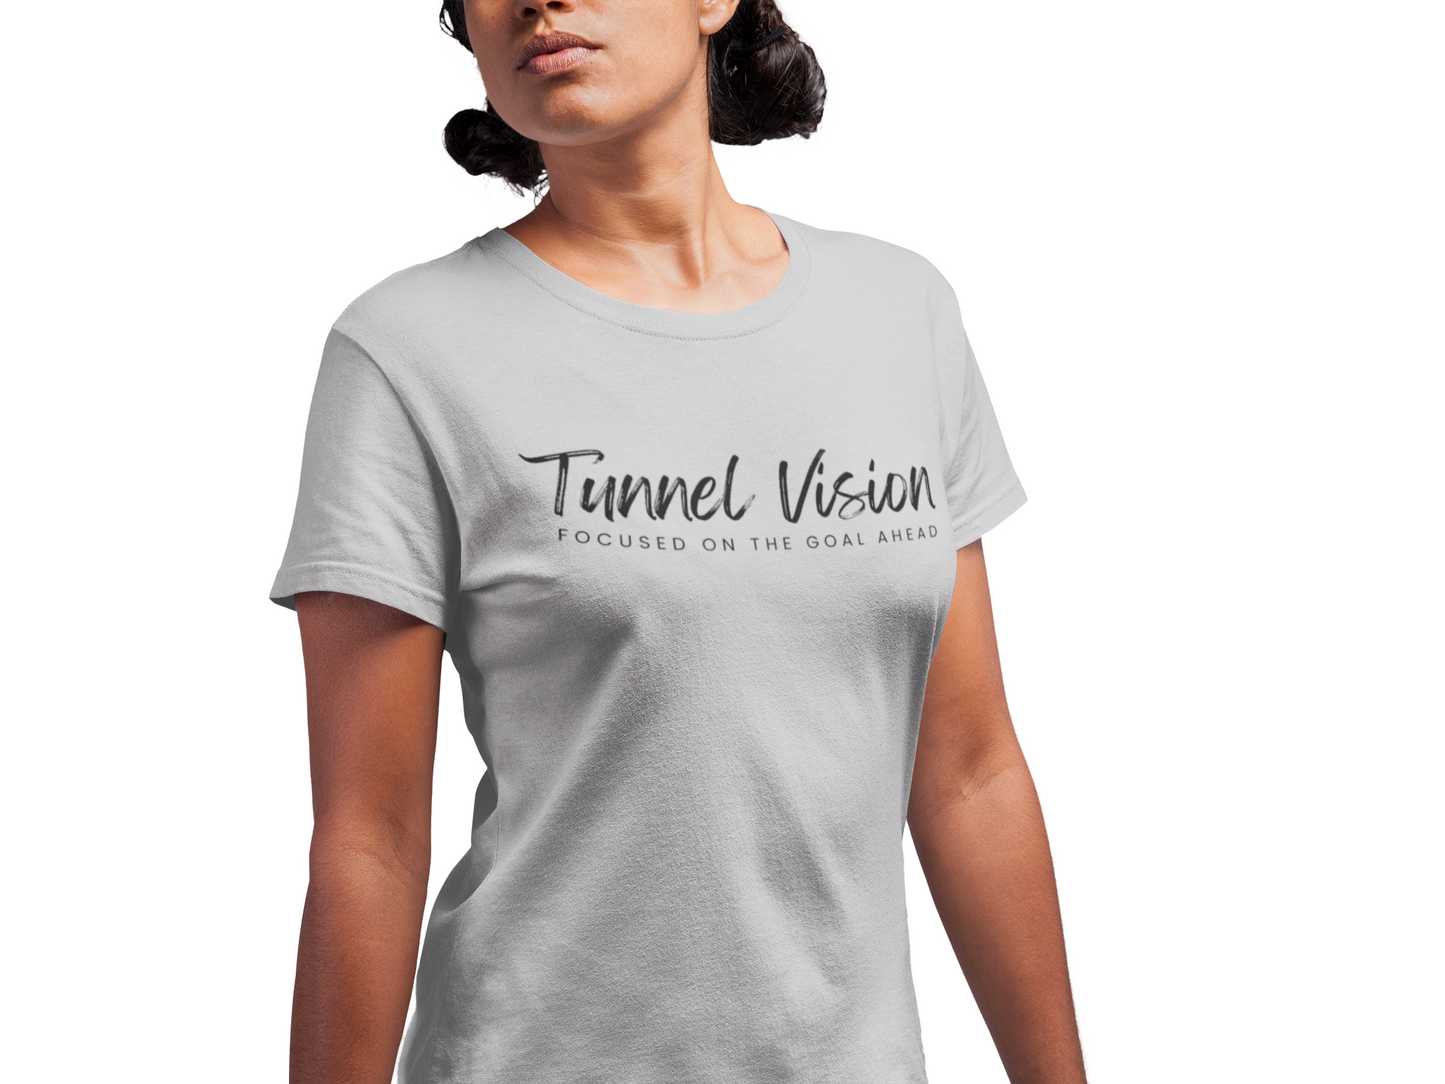 Elite Tunnel Vision Spine Tee - Tunnel Vision Tees